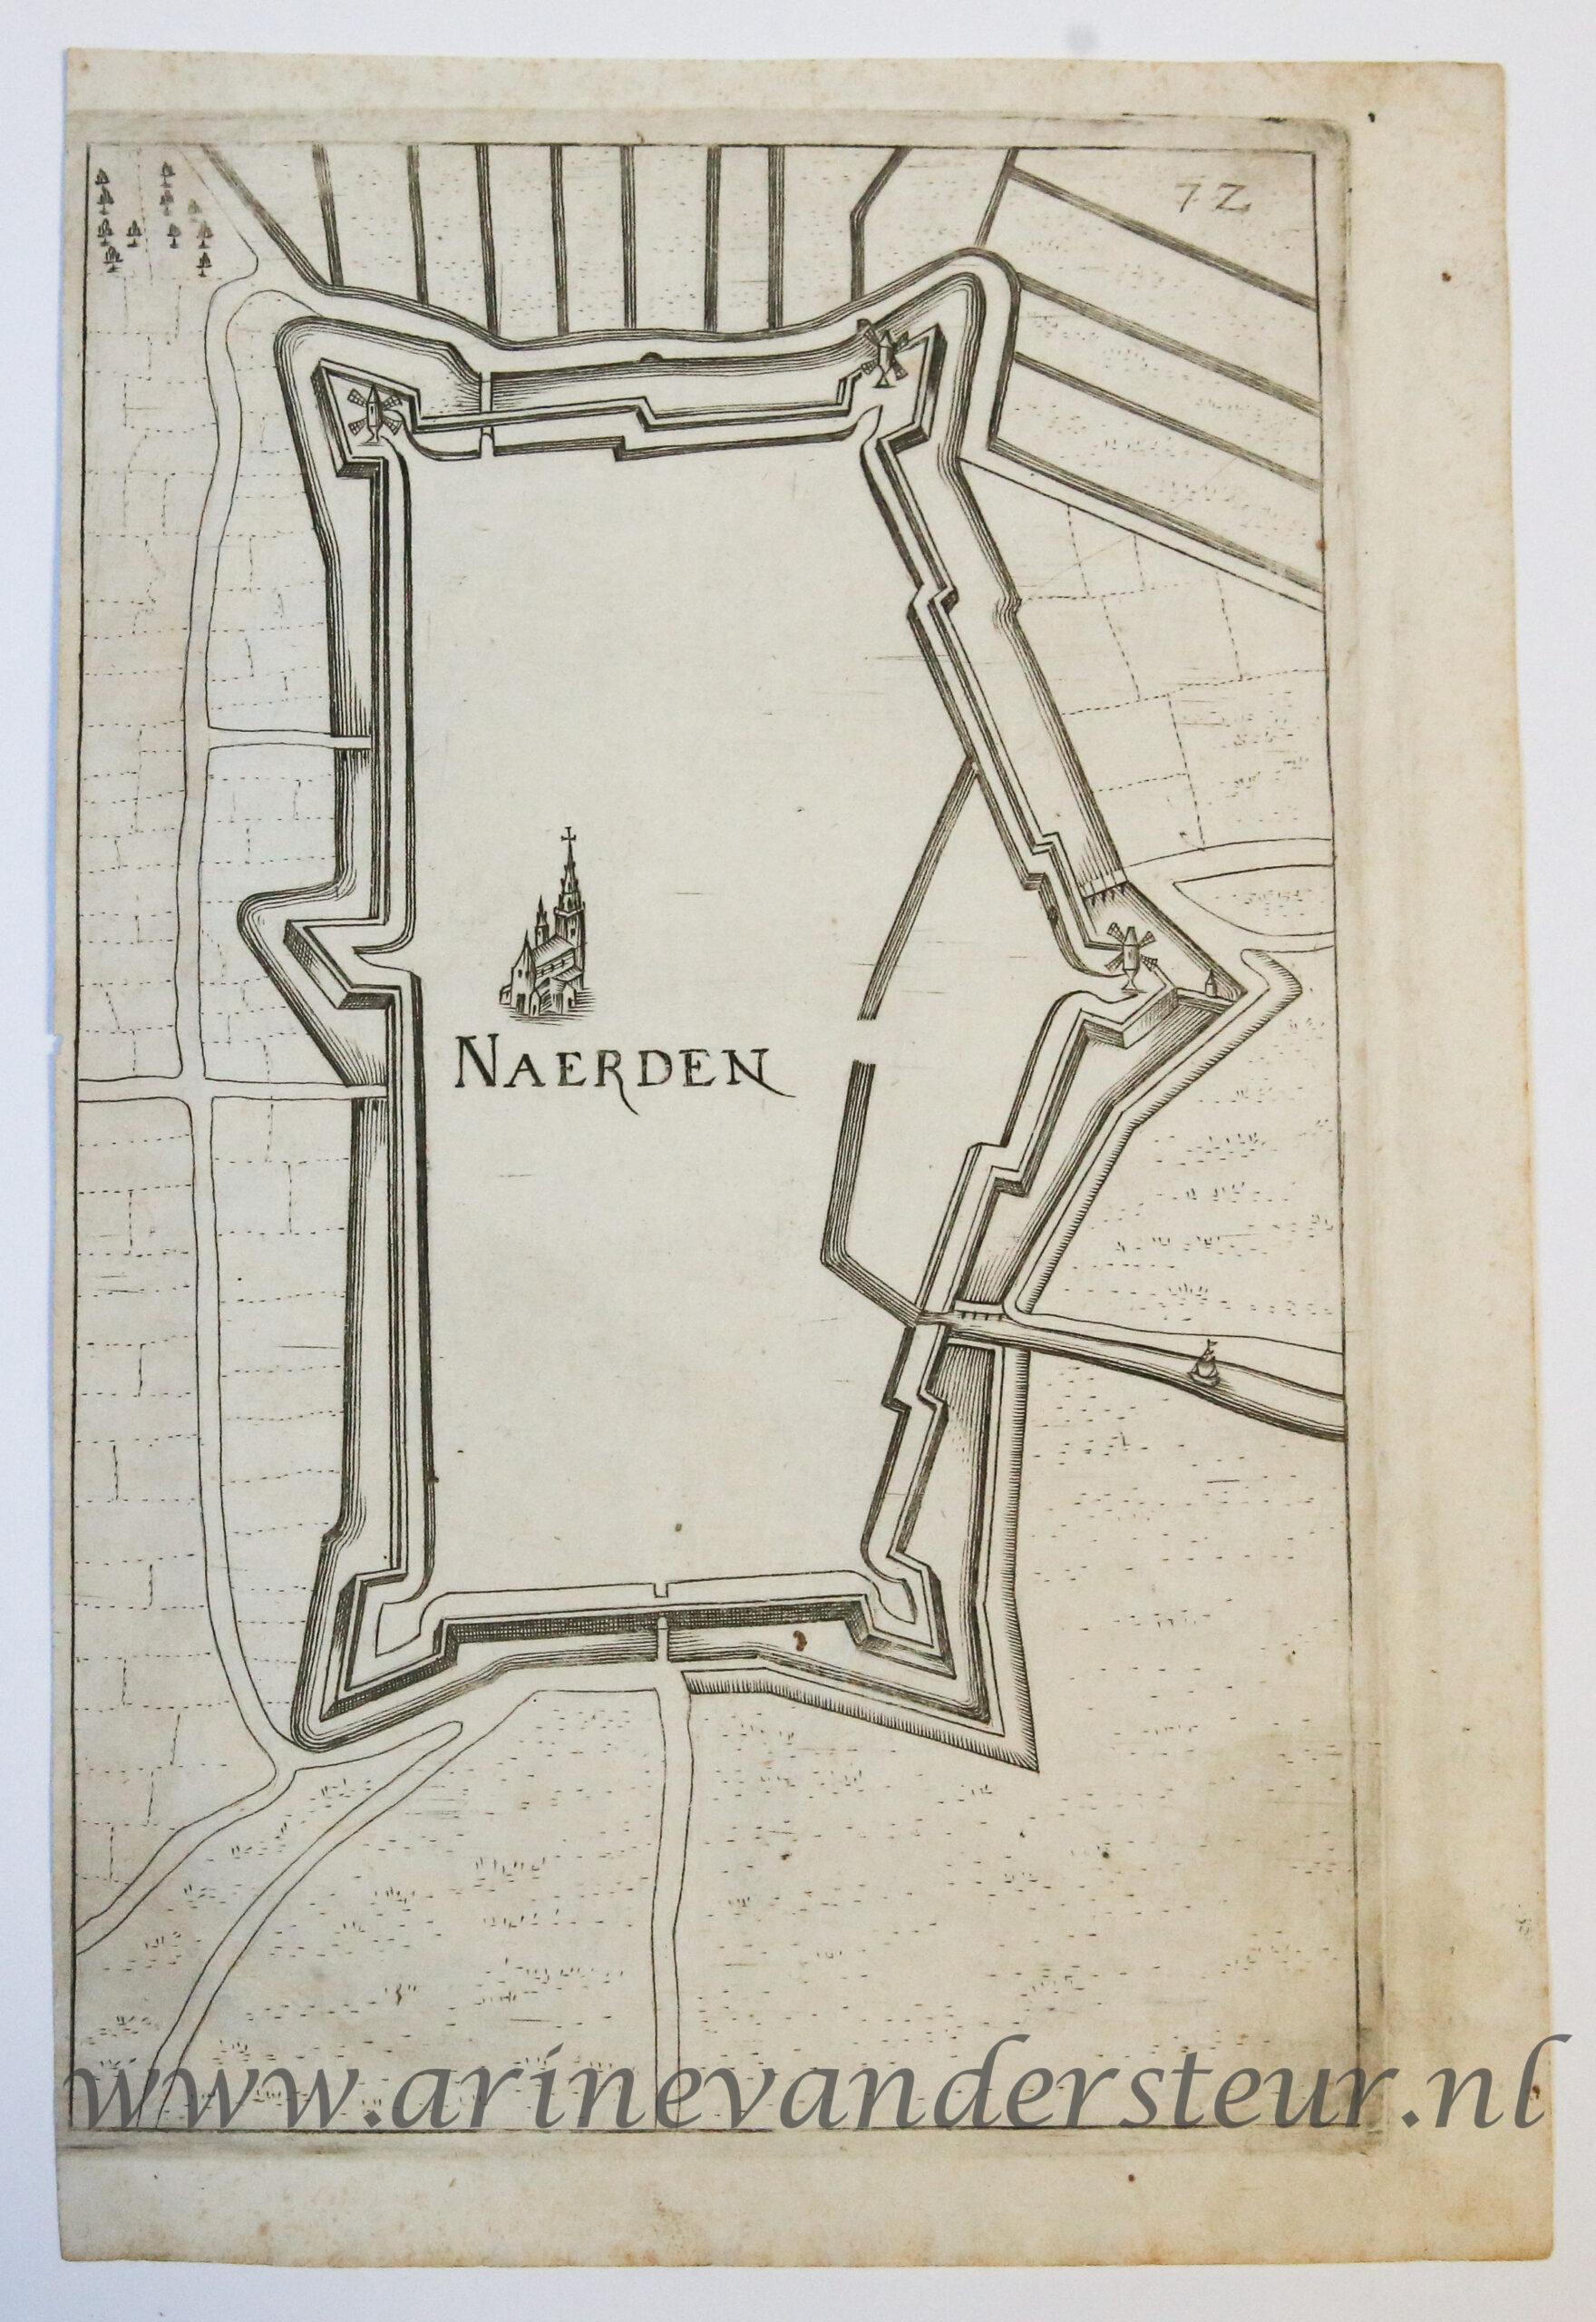  - [Antique print; cartography, oude prent Naarden] NAERDEN, published 1673.